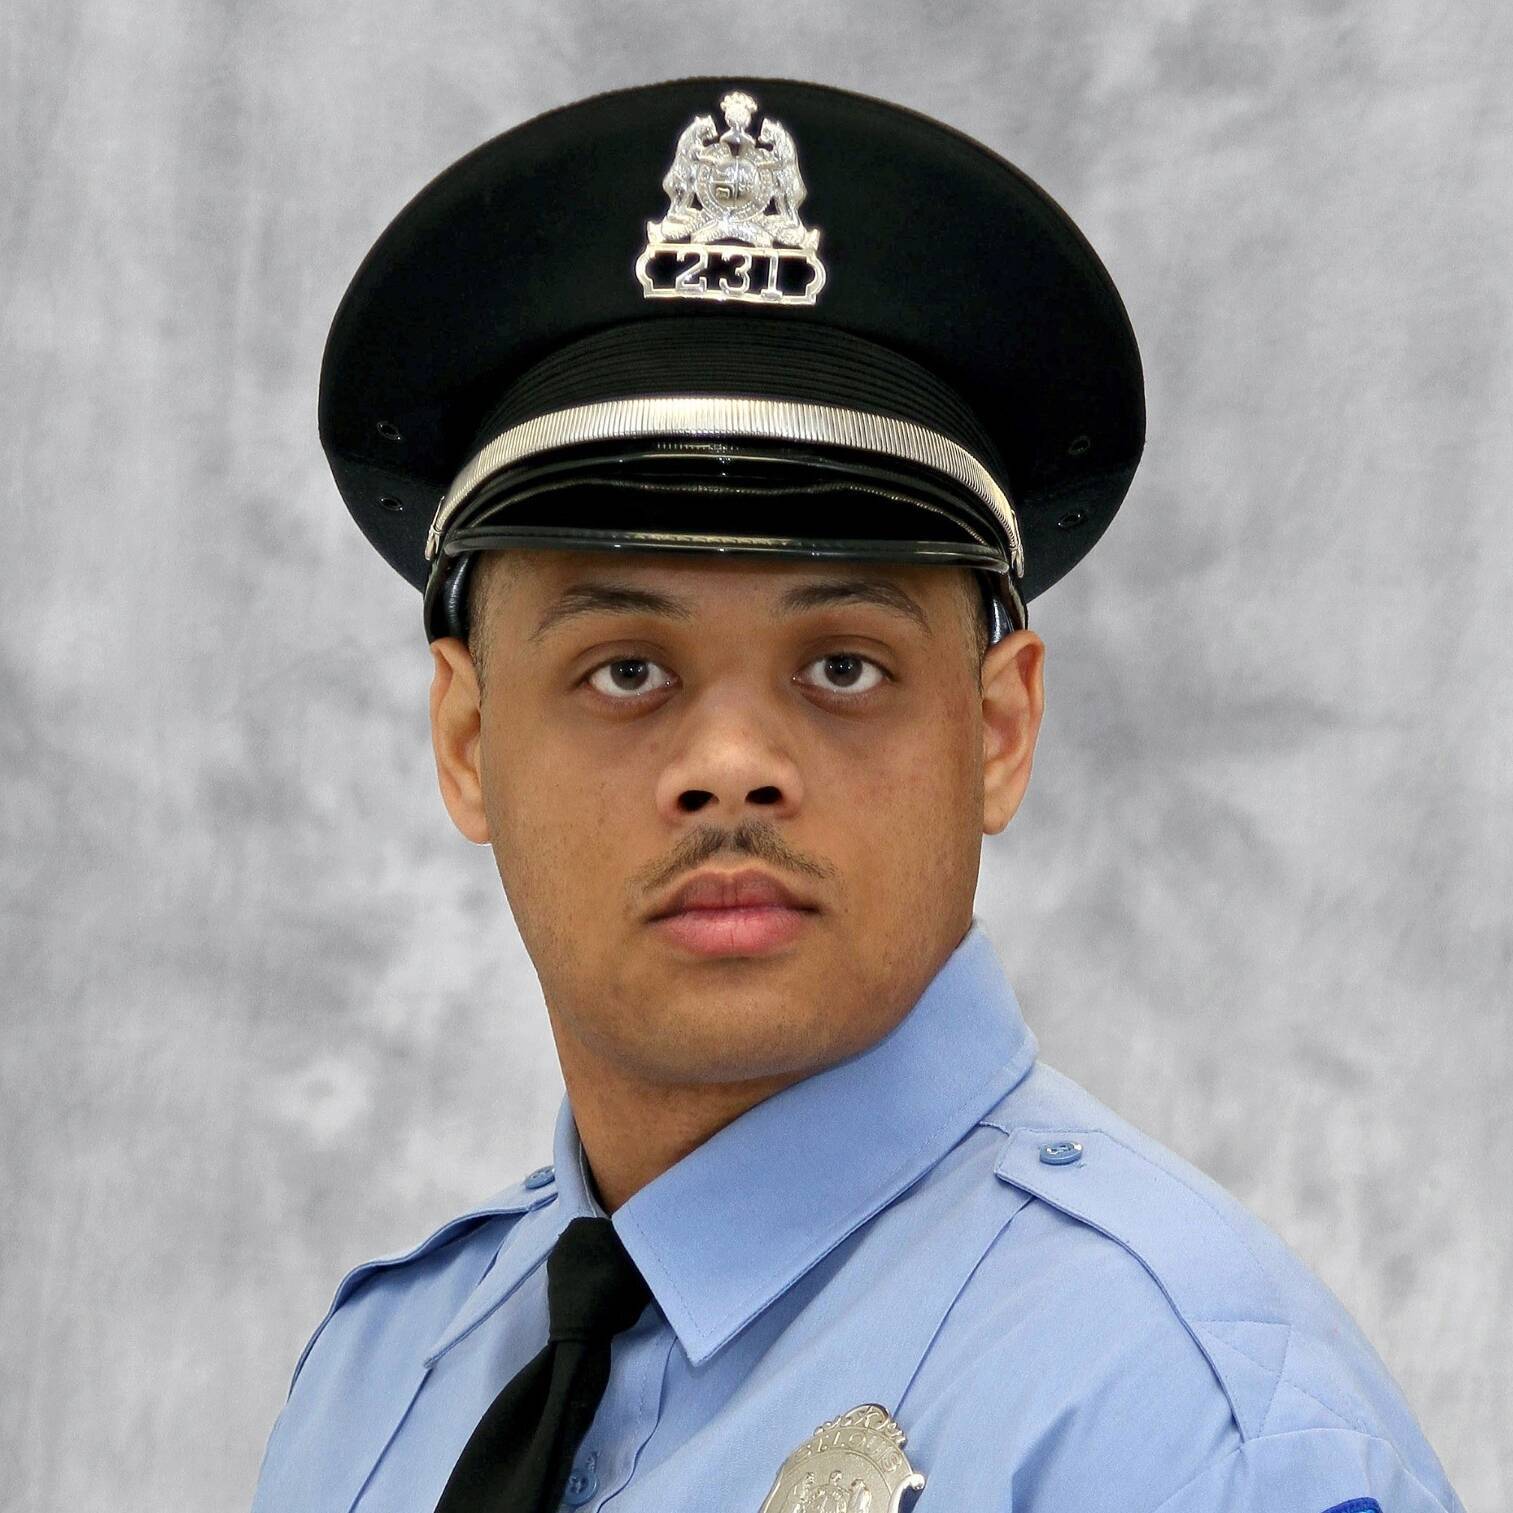 Officer Tamarris Bohannon Memorial Scholarship Fund